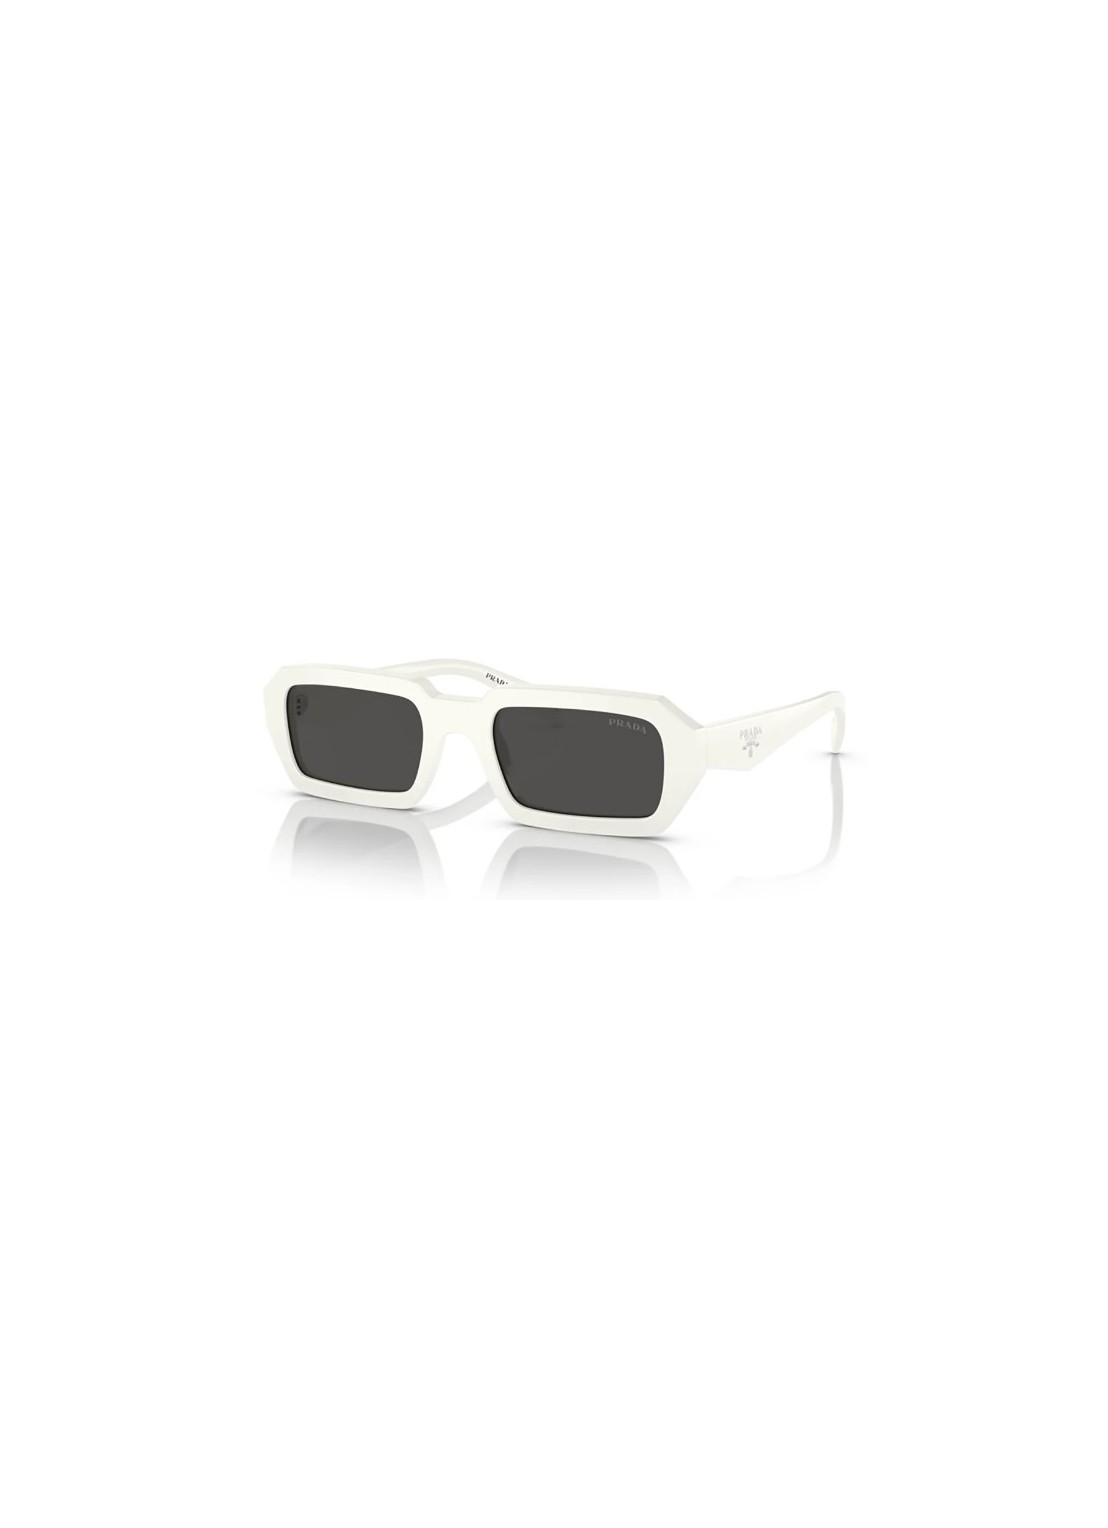 Gafas prada sunglasses woman 0pra12s 0pra12s 17k08z talla transparente
 